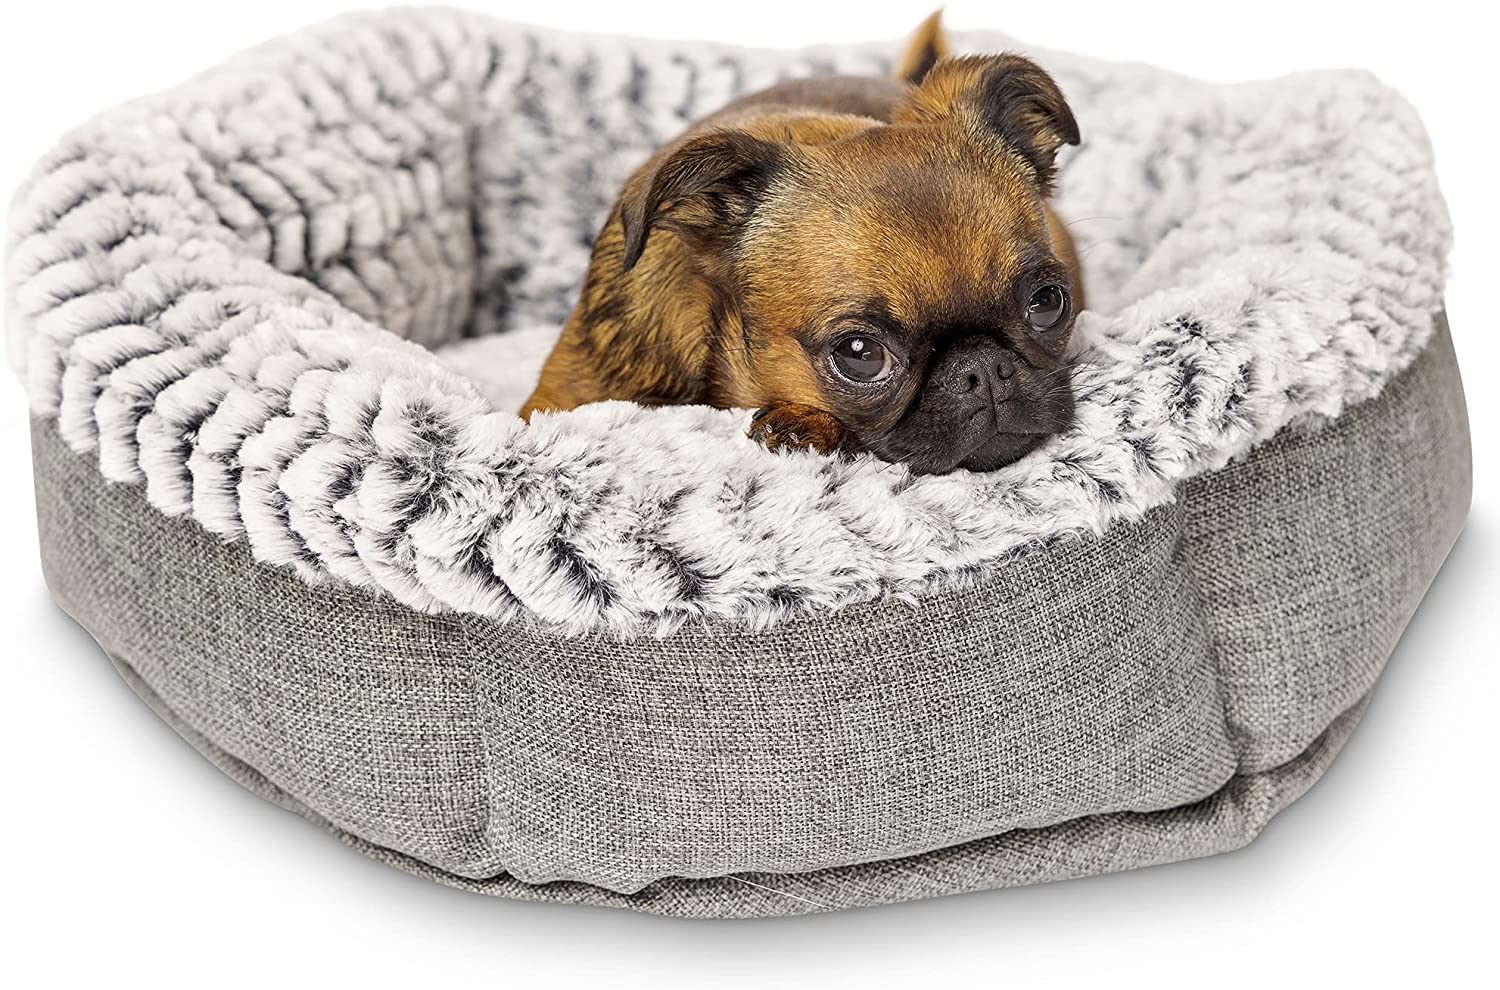 Pet Craft Temperature-Sensitive Pet Bed For Office